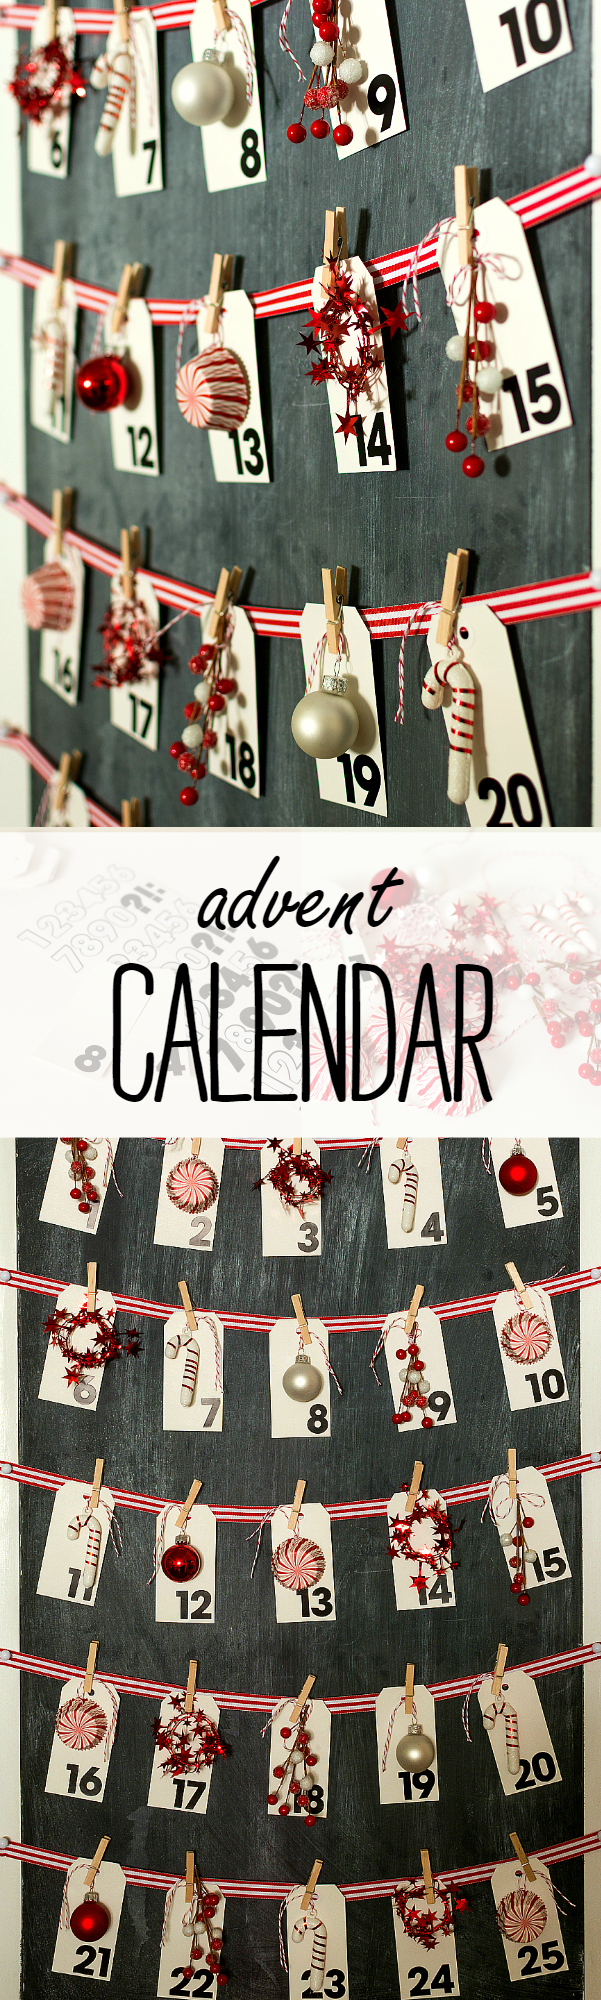 Christmas Craft Ideas: Advent Calendar Make Your Own